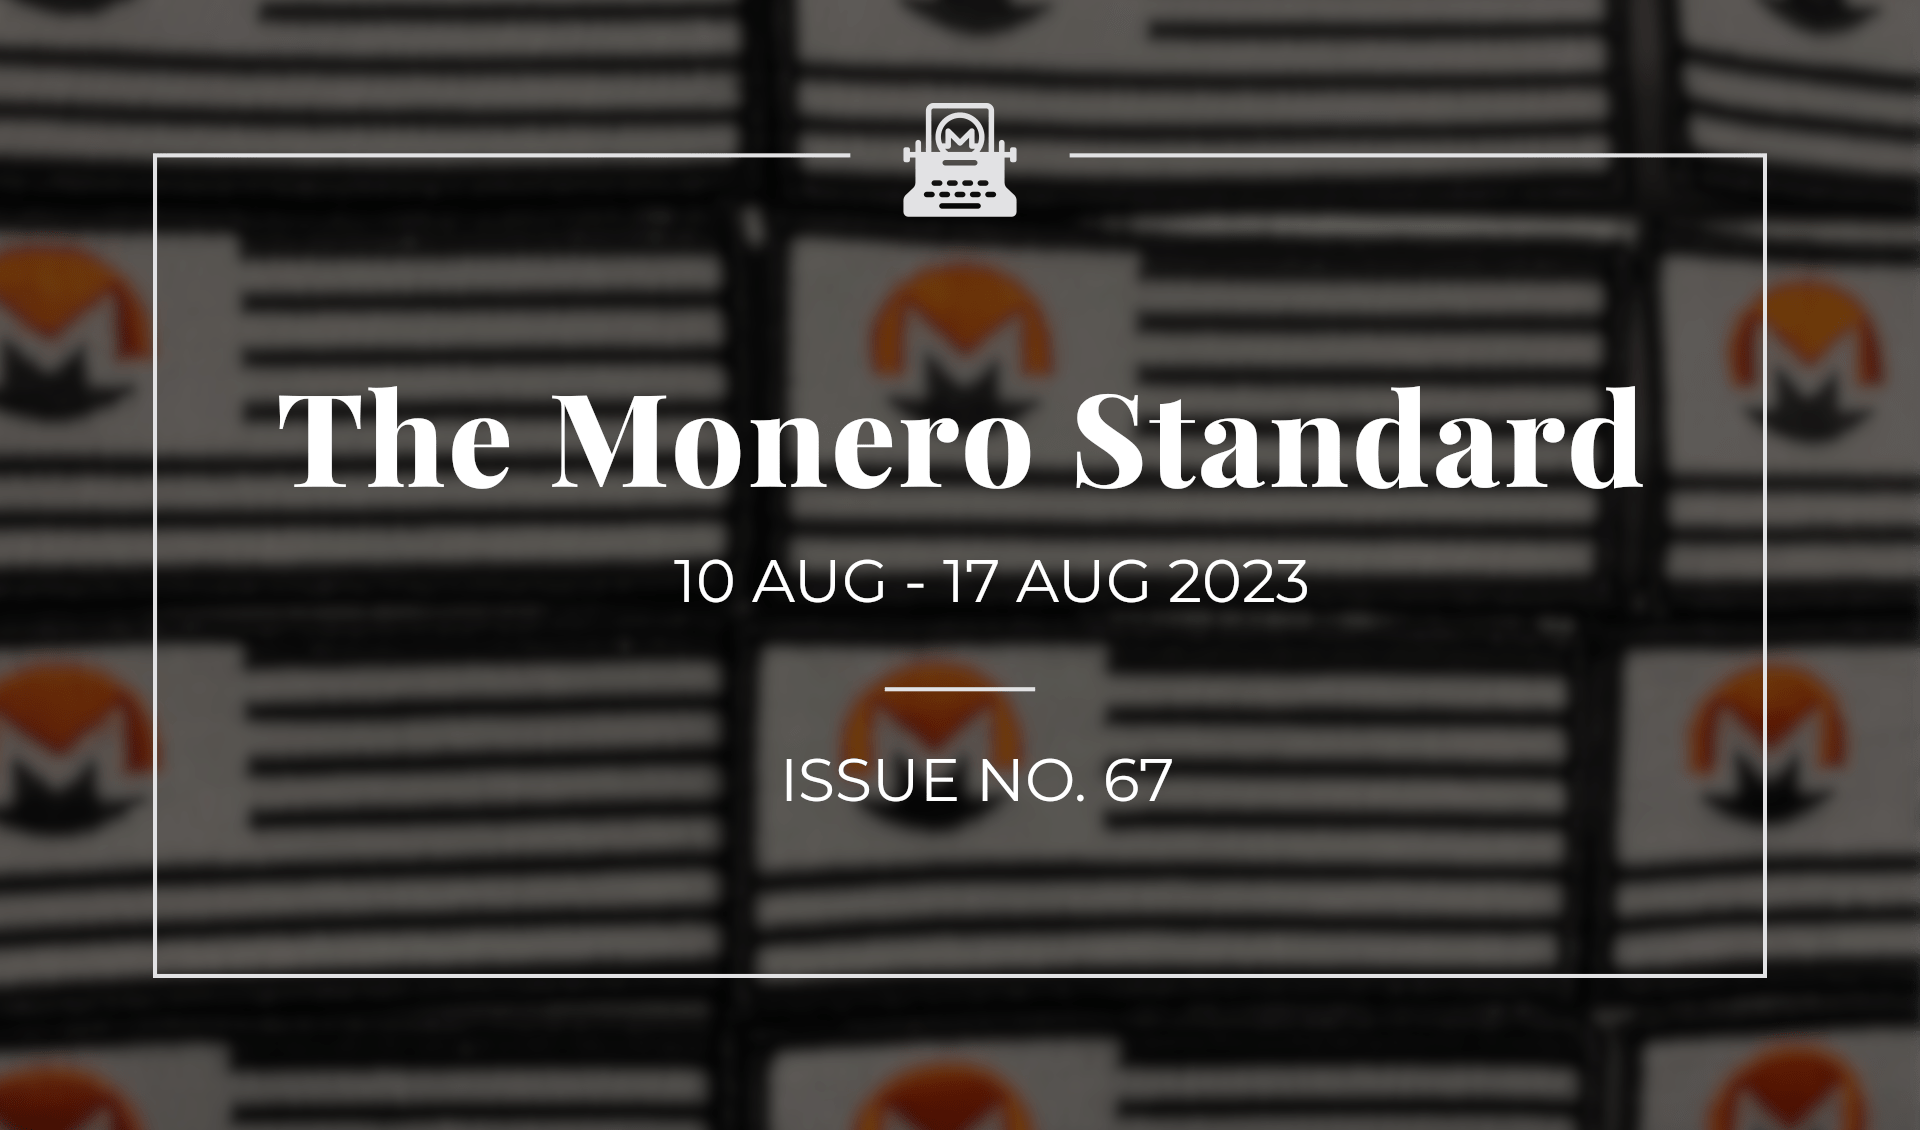 The Monero Standard #67: 10 Aug 2023 - 17 Aug 2023